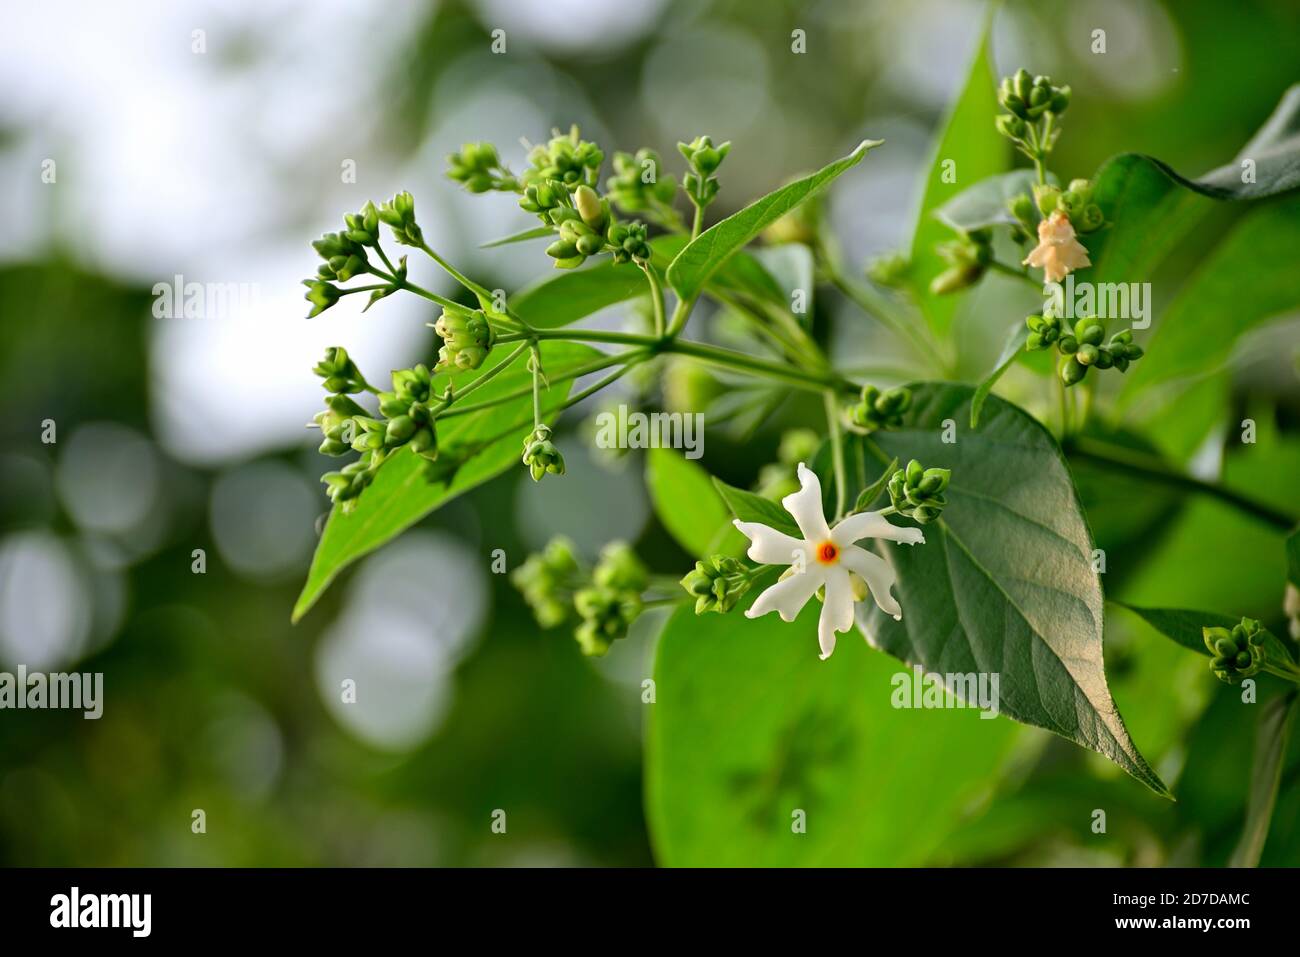 Raat Ki Rani Flower High Resolution Stock Photography and Images - Alamy